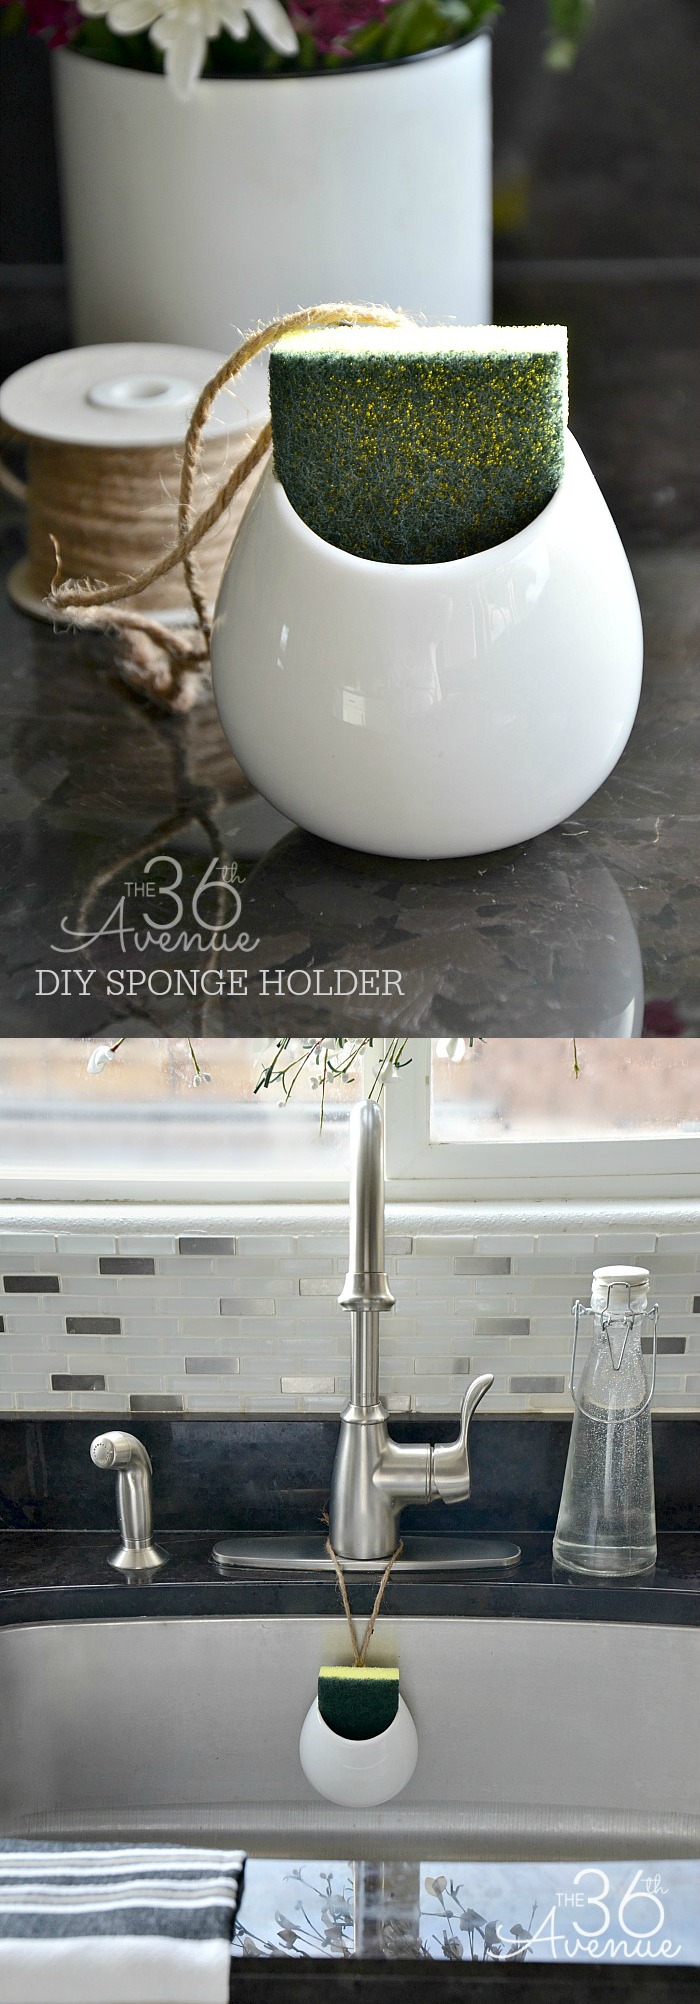 DIY Home Project - DIY Sponge Holder Tutorial at the36thavenue.com